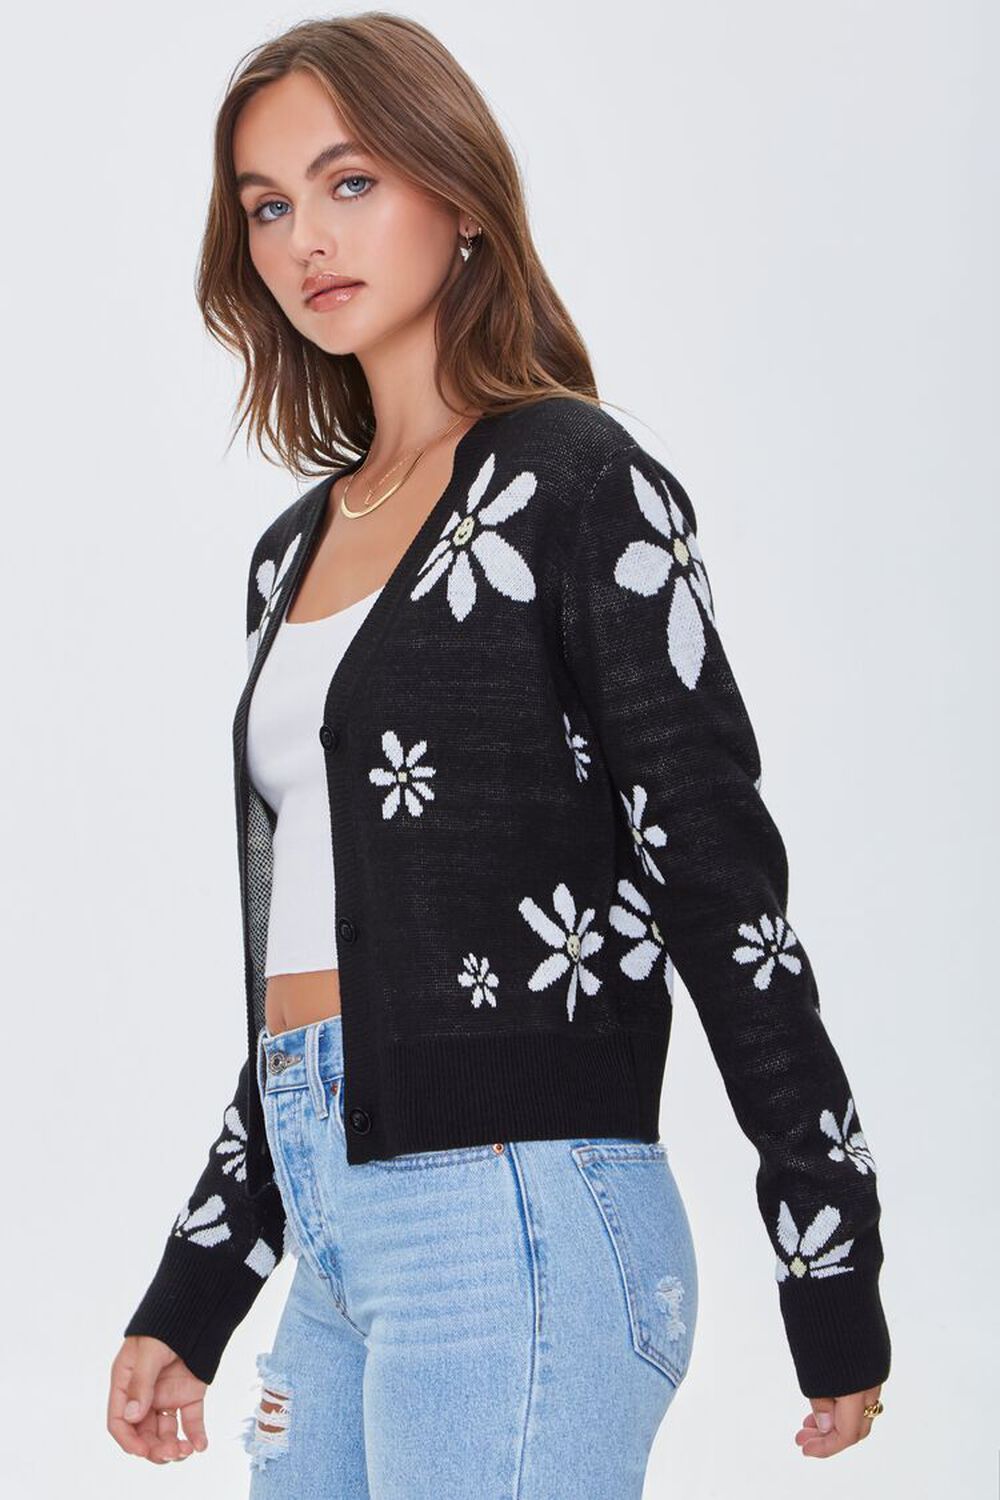 Daisy Print Cardigan Sweater